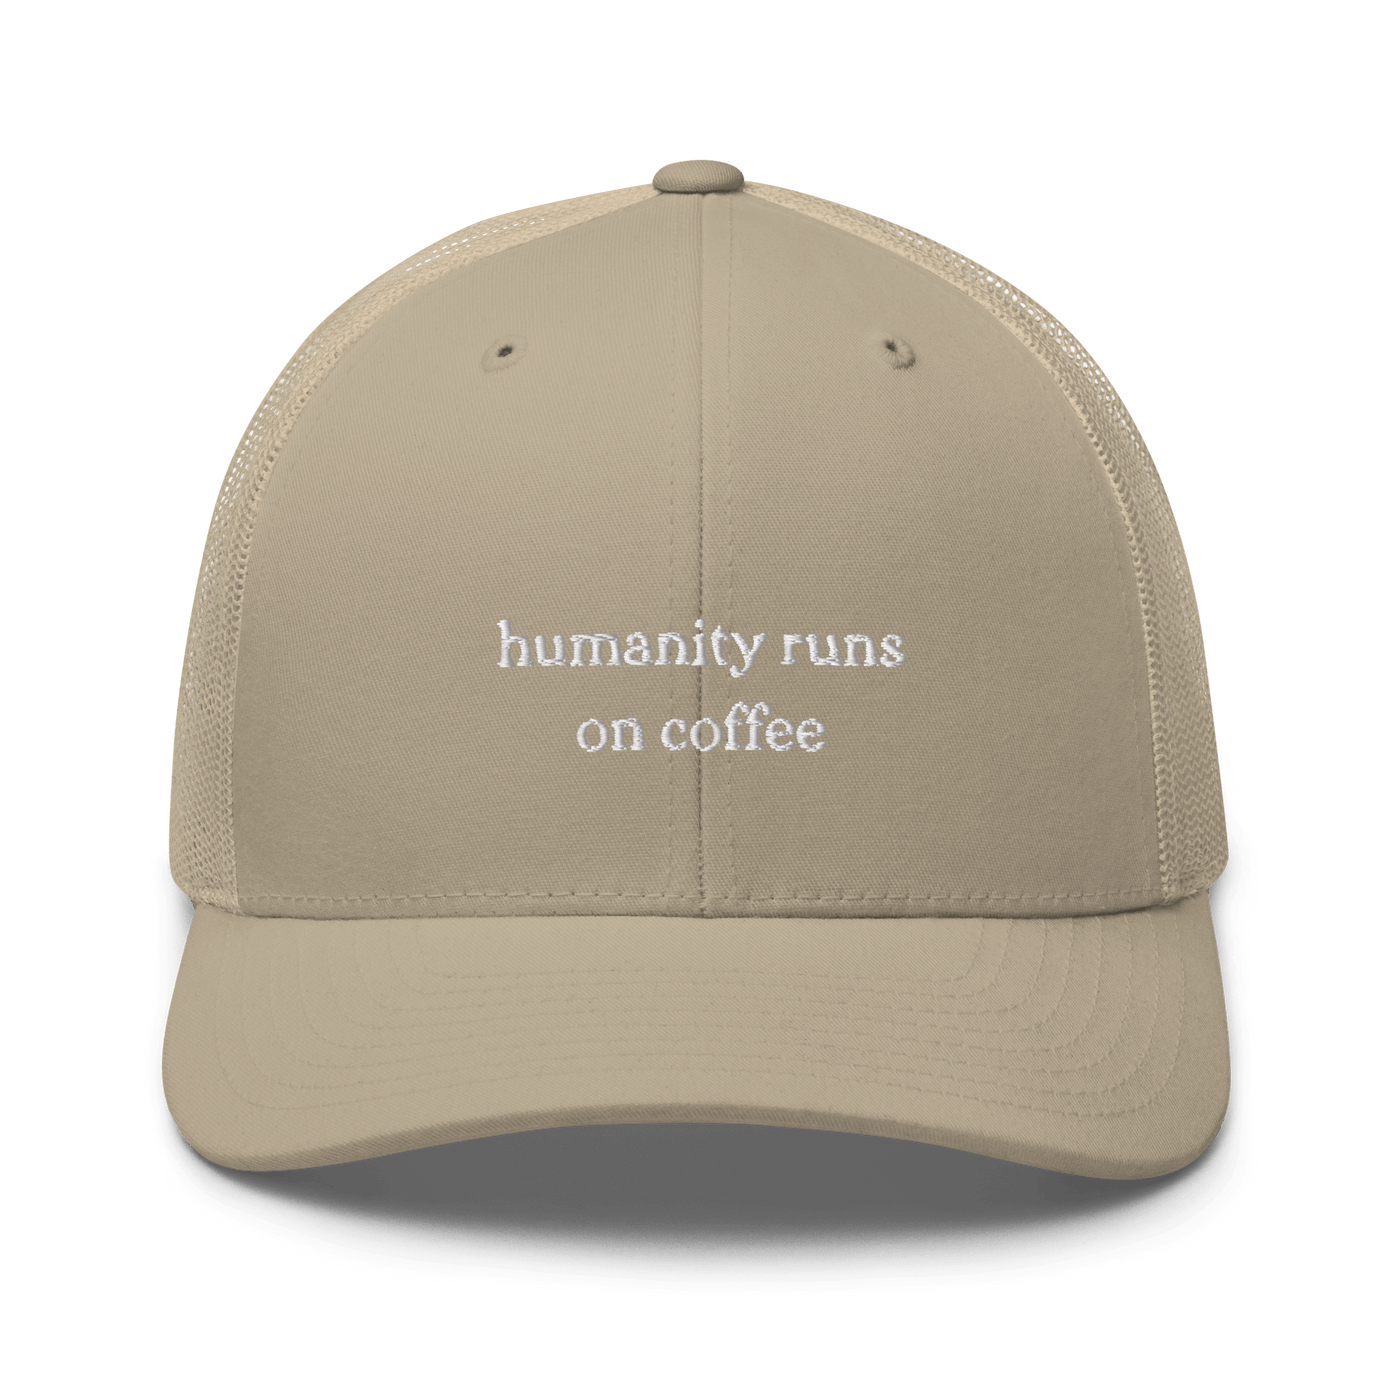 Humanity Runs on Coffee Trucker Cap - Khaki - - Just Another Cap Store